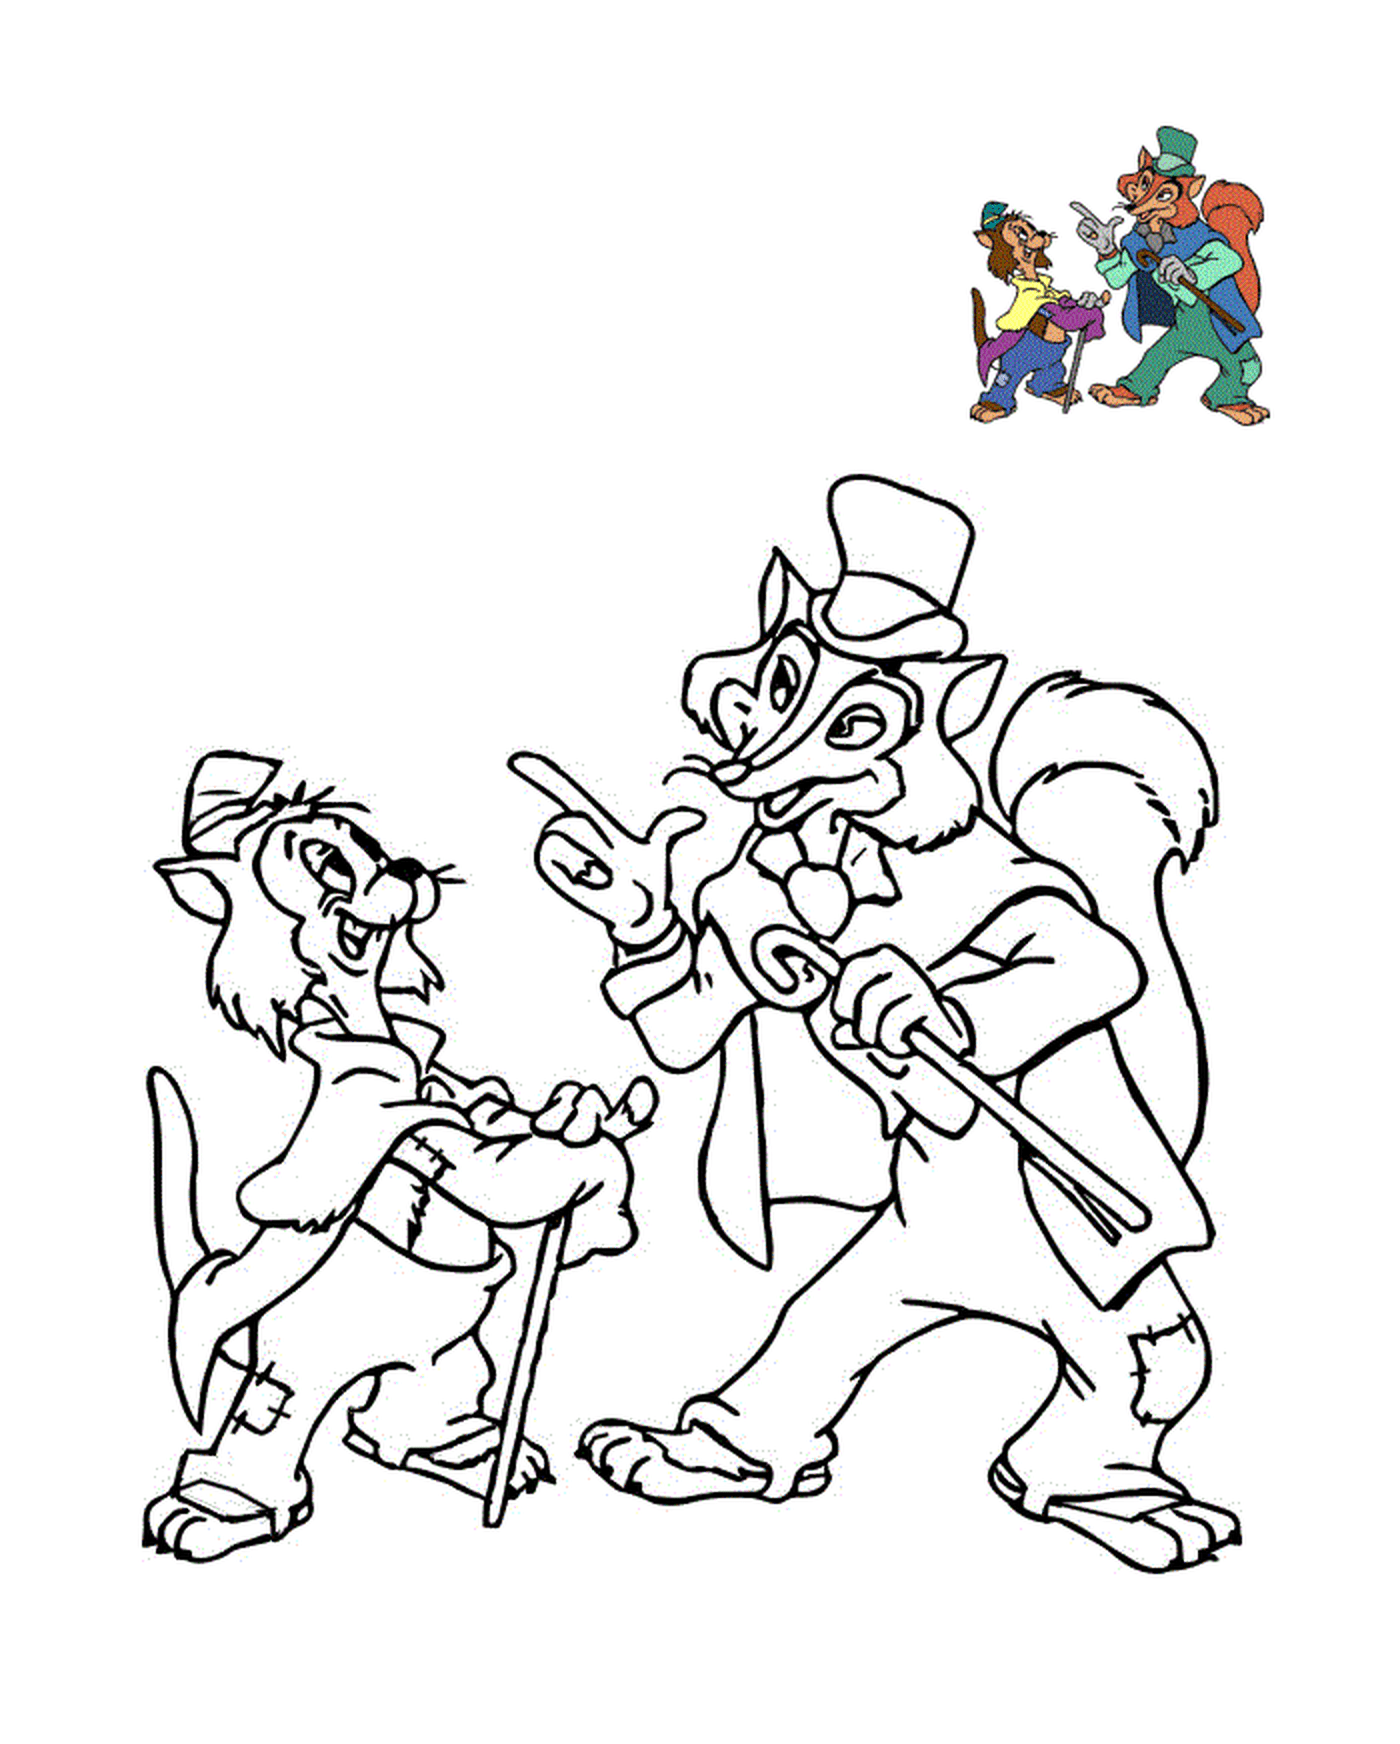  Gideon and Grand Coquin, Pinocchio 1940 